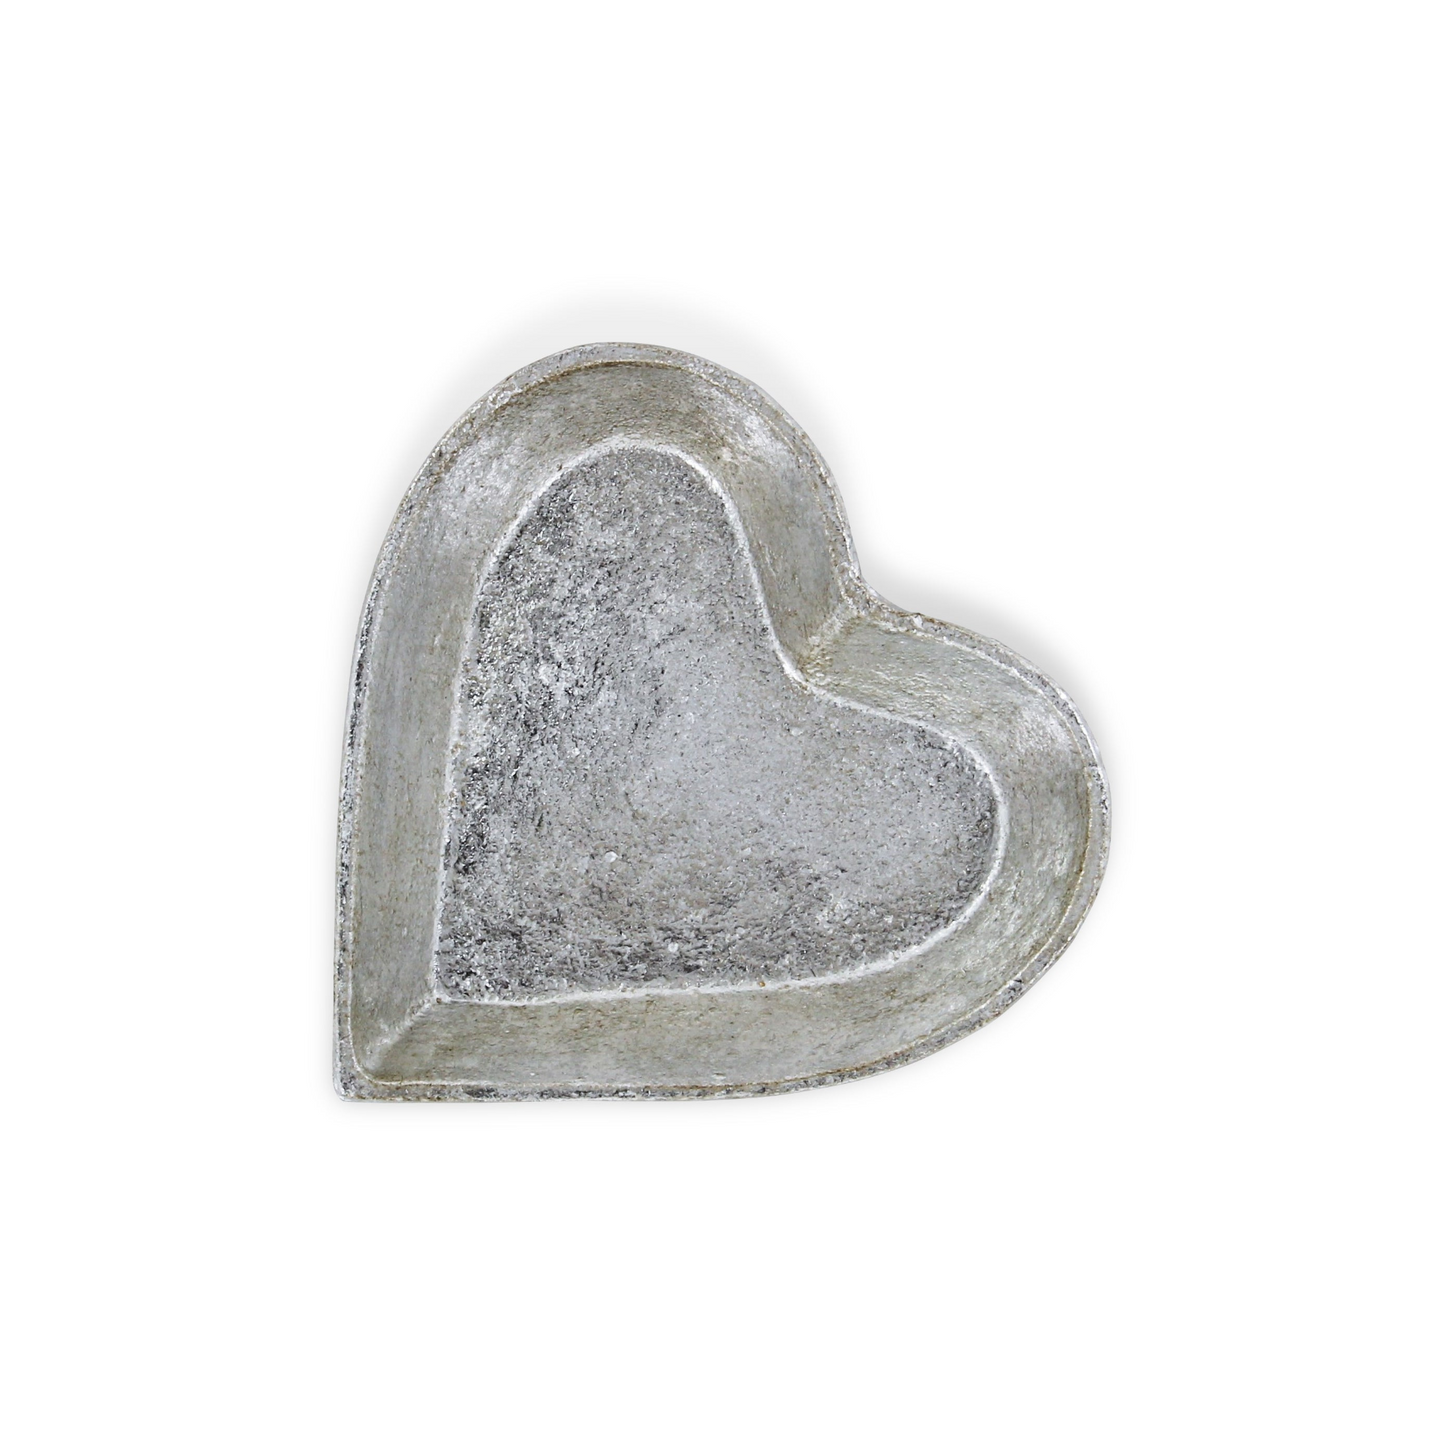 7" Silver Heart Cast Iron Handmade Vanity Tray - Decorative Metal Tray for Home